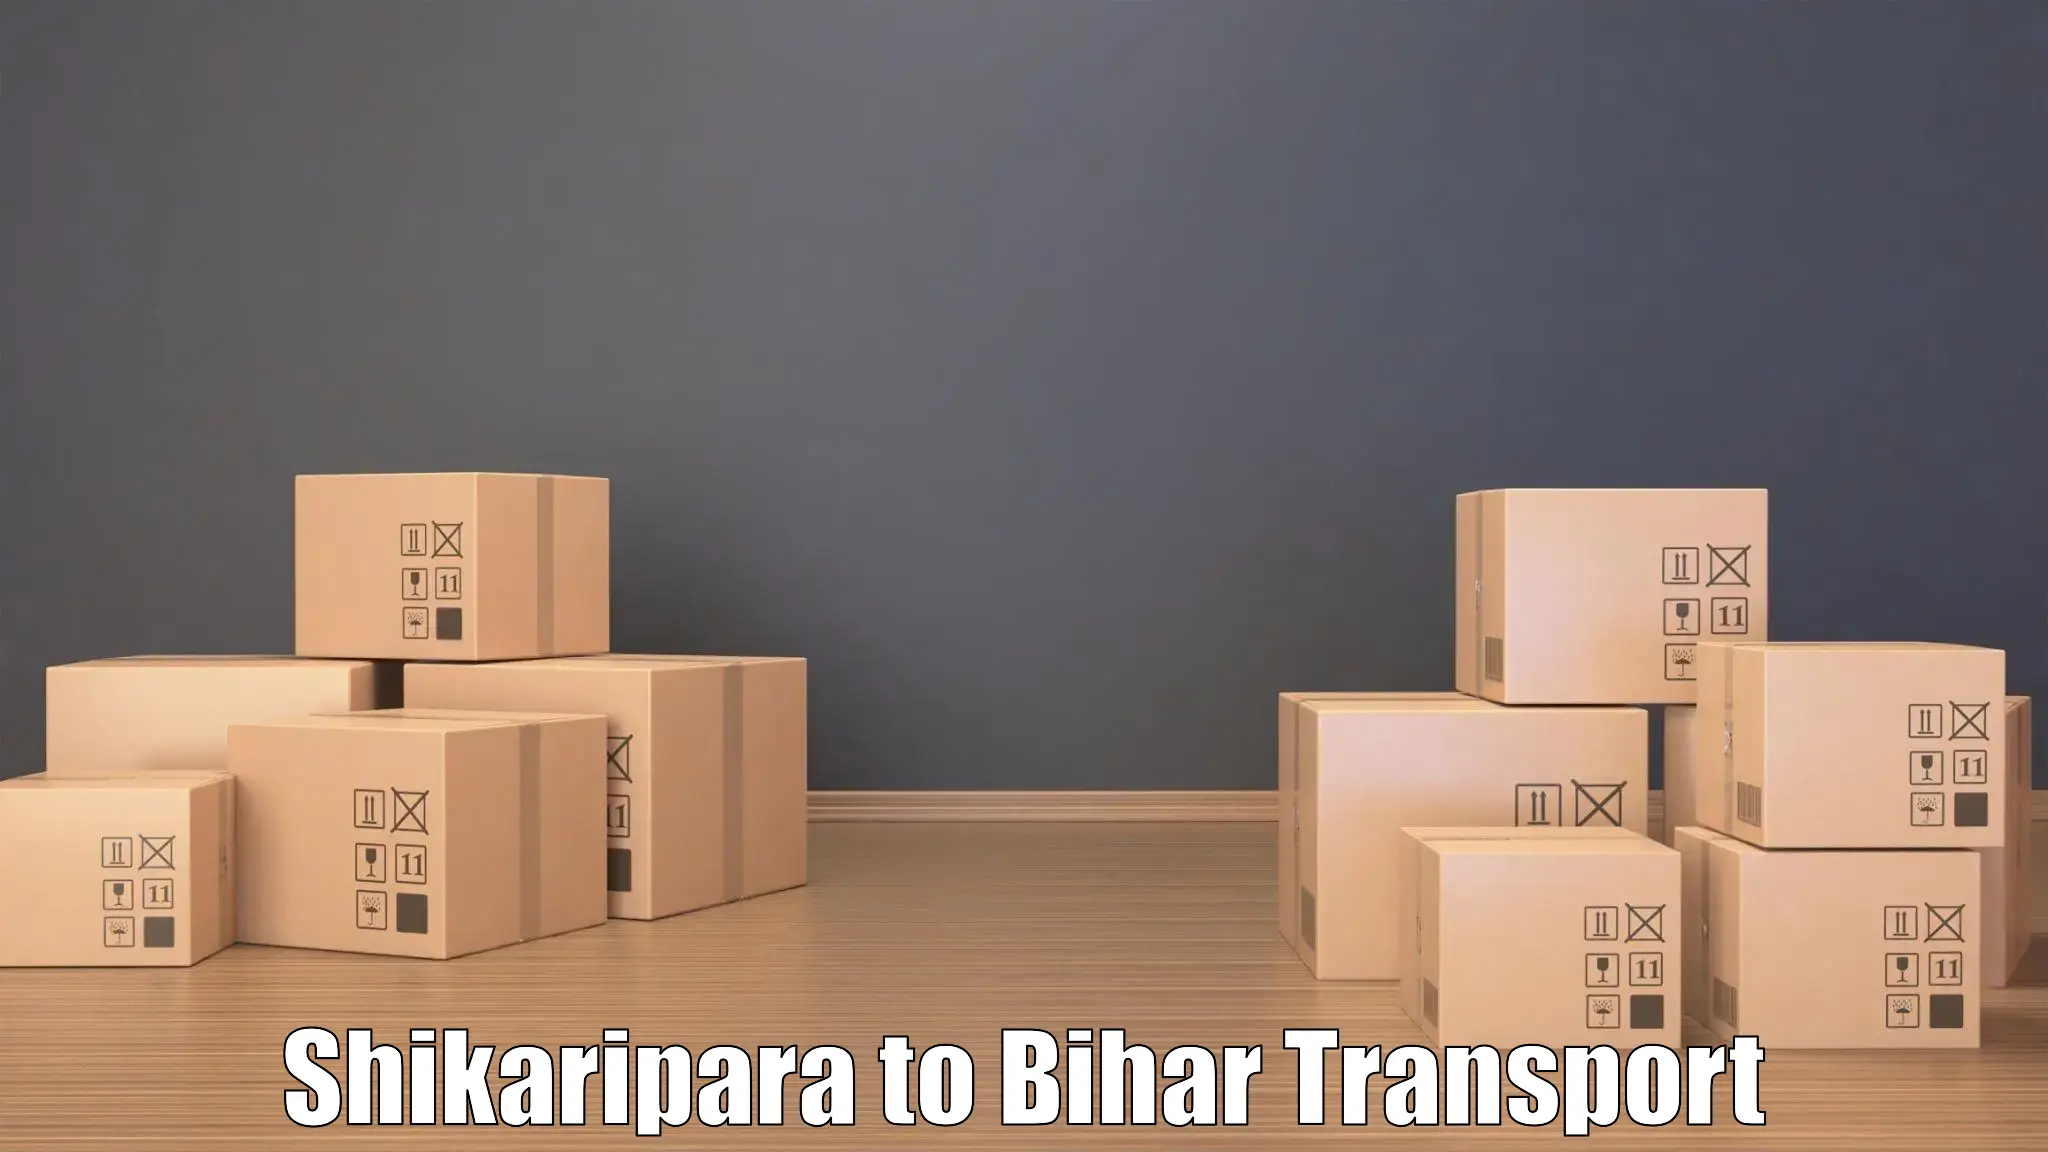 Delivery service Shikaripara to Mohammadpur